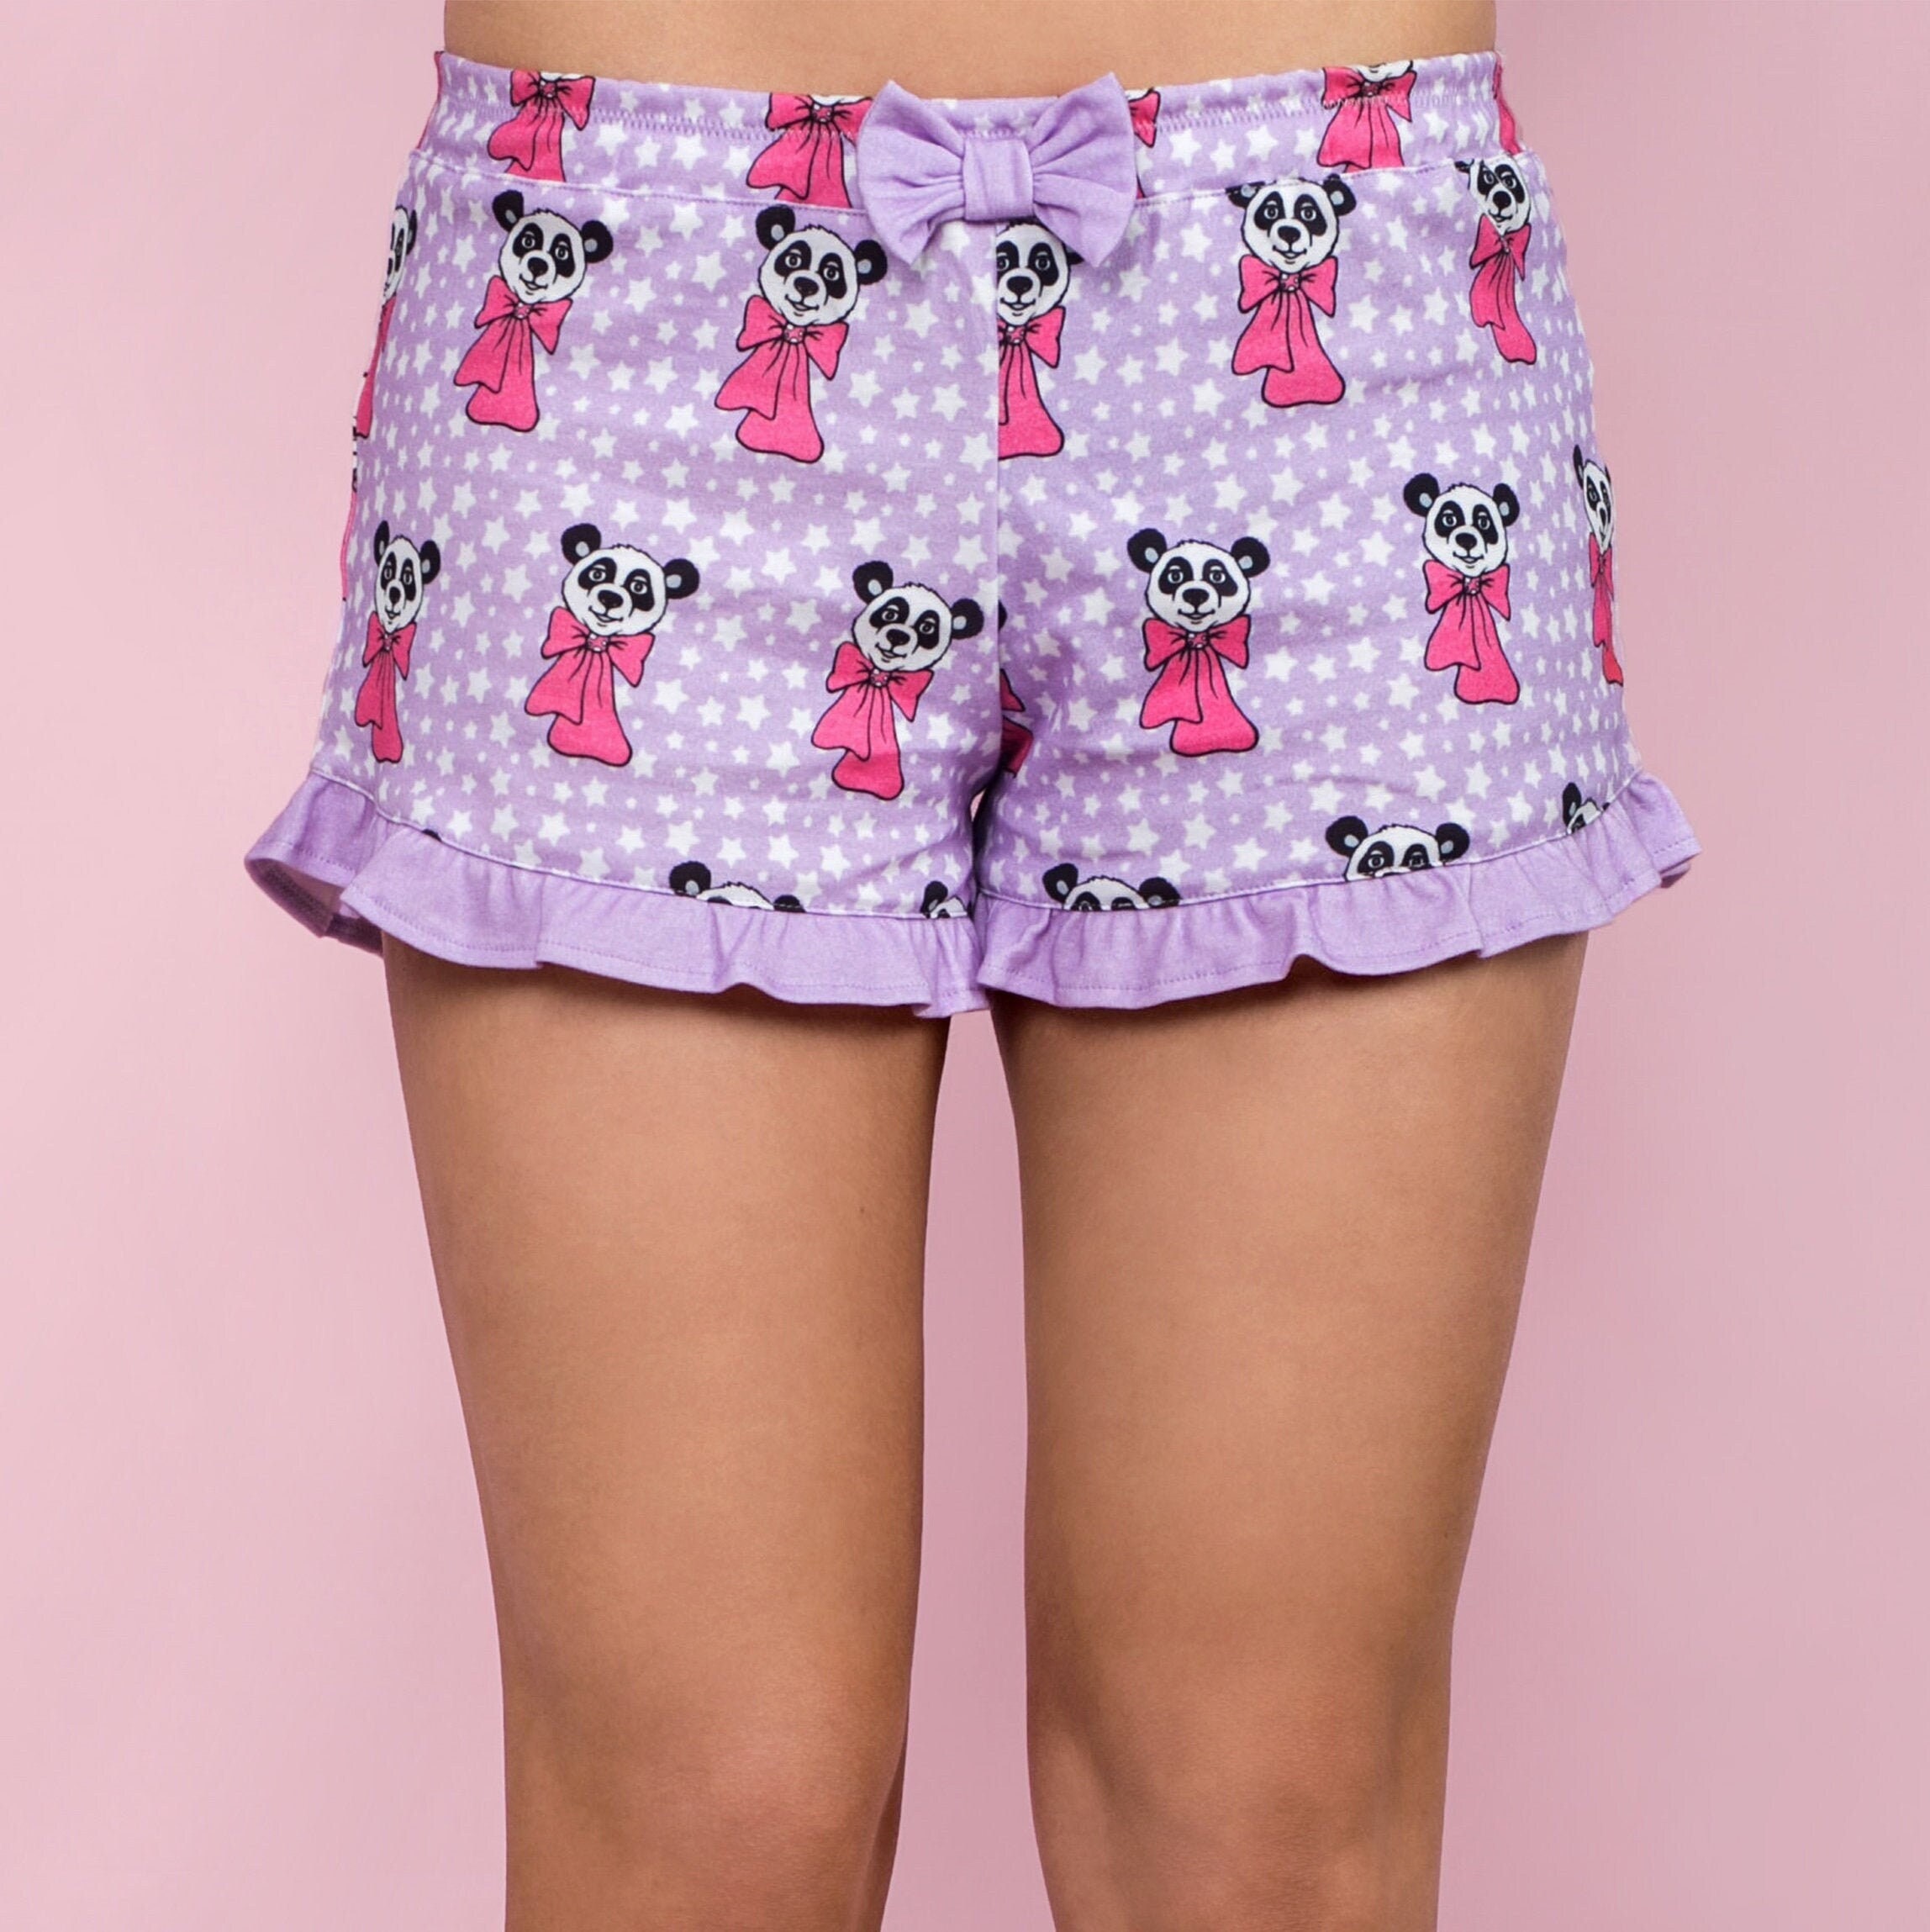 Panda Pyjama Shorts, Loungewear Bottoms, Pj's, Panda Sleepwear, Women's  Sleepwear, Cotton Pyjamas, Women's Pajama Shorts, Cute Gift for Her 